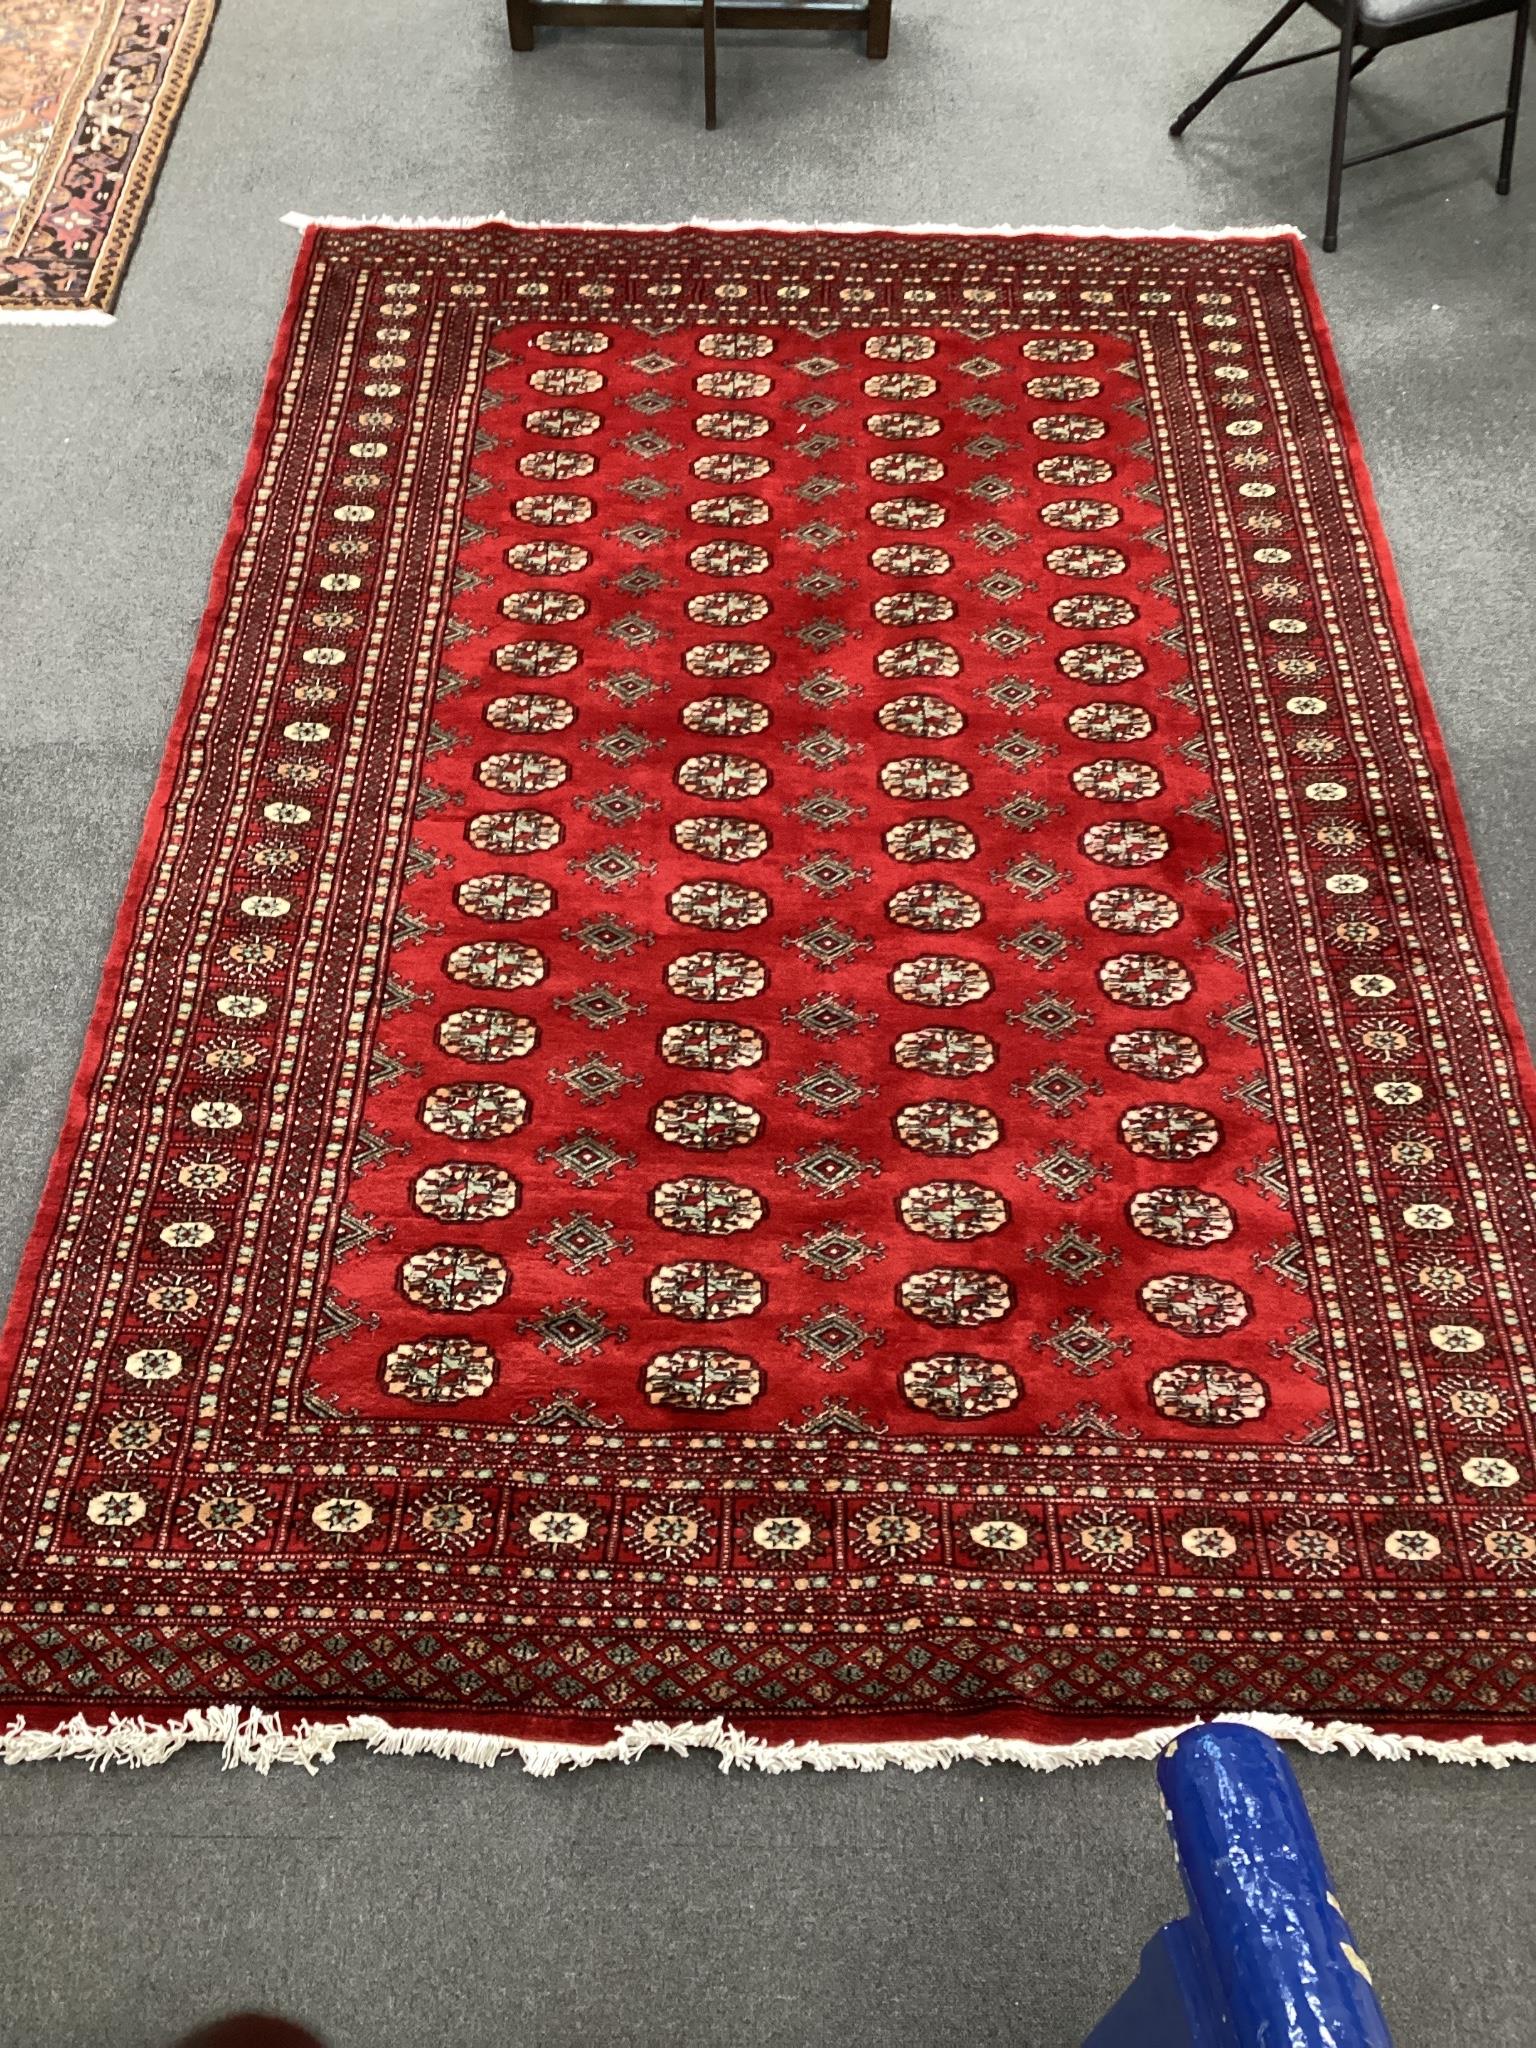 A Bokhara style red ground carpet, 280cm x 188cm                                                                                                                                                                            